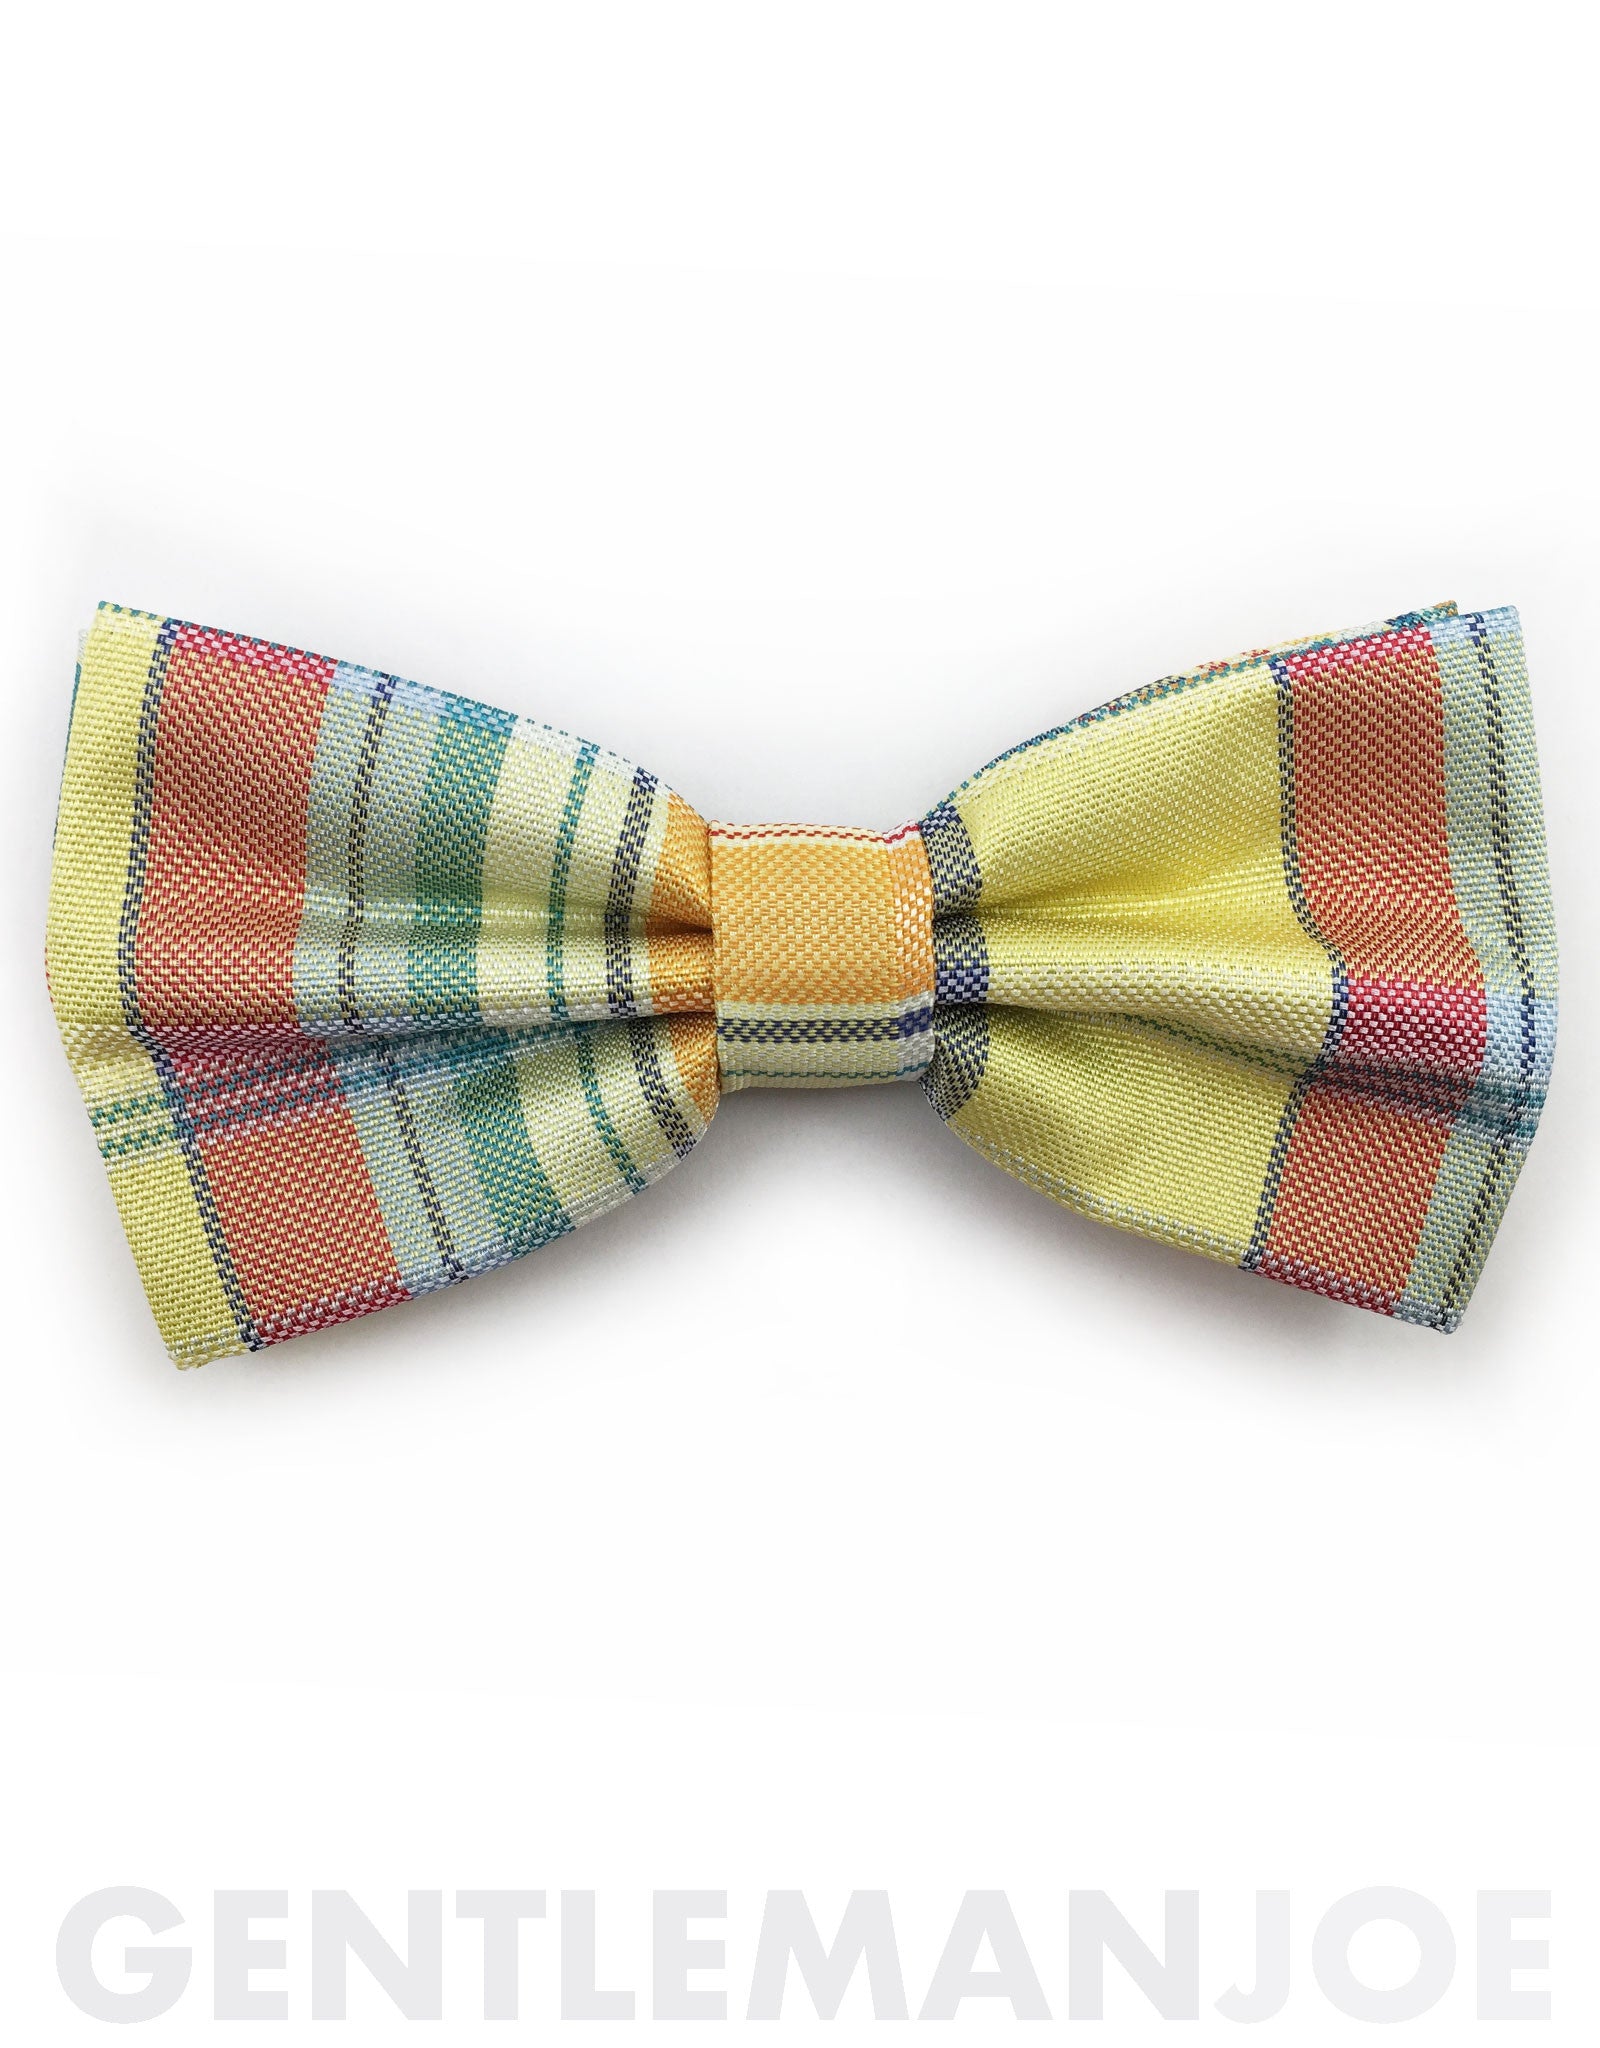 yellow, orange, green plaid bow tie